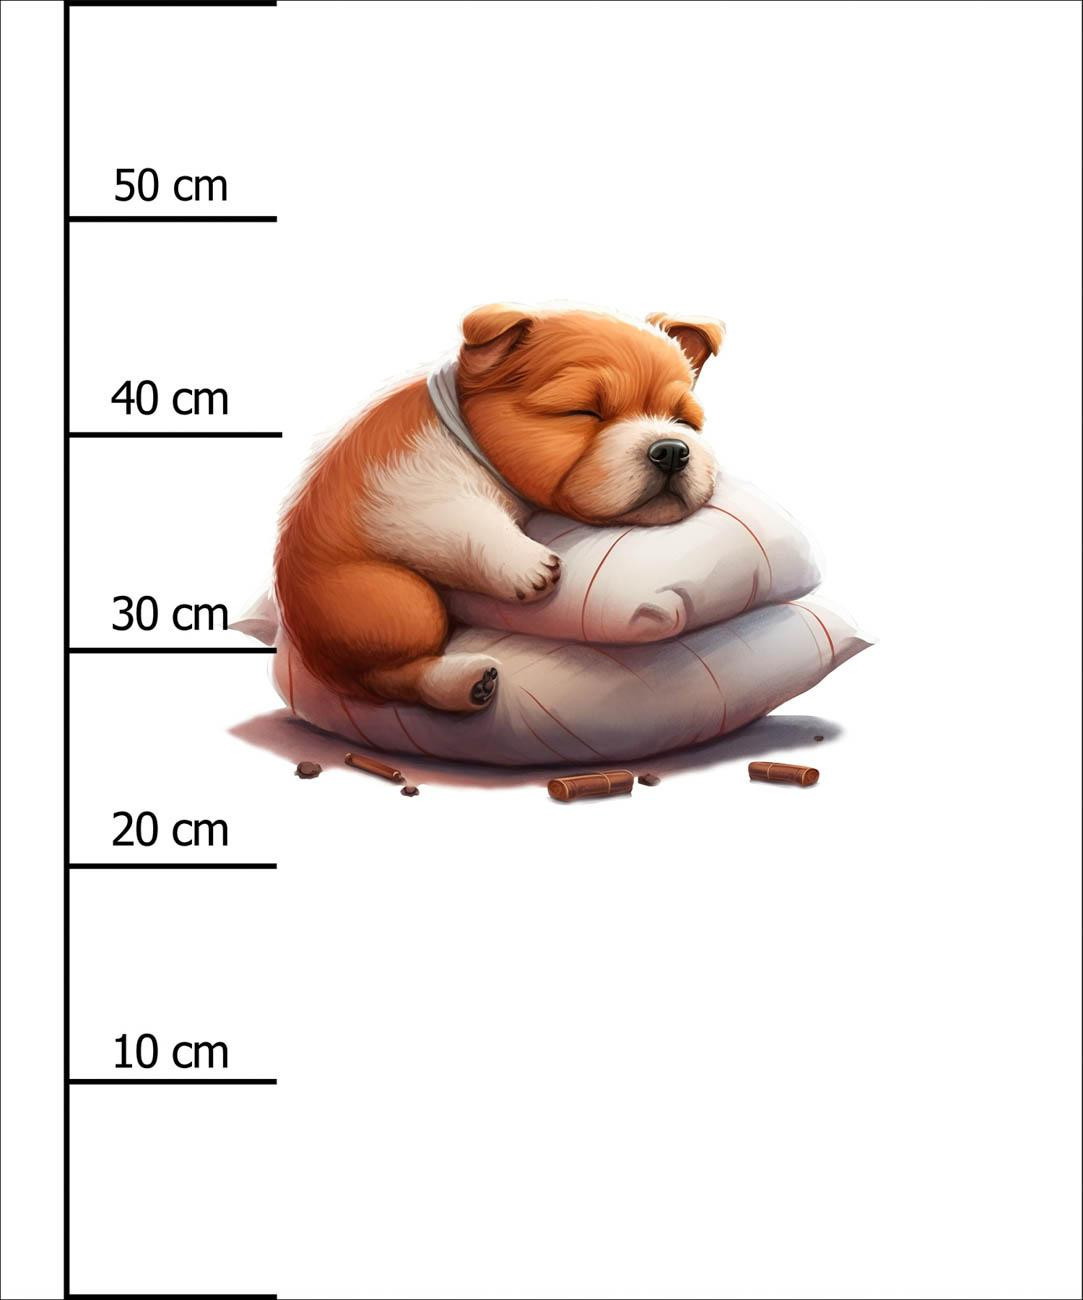 SLEEPING DOG - Paneel (60cm x 50cm)